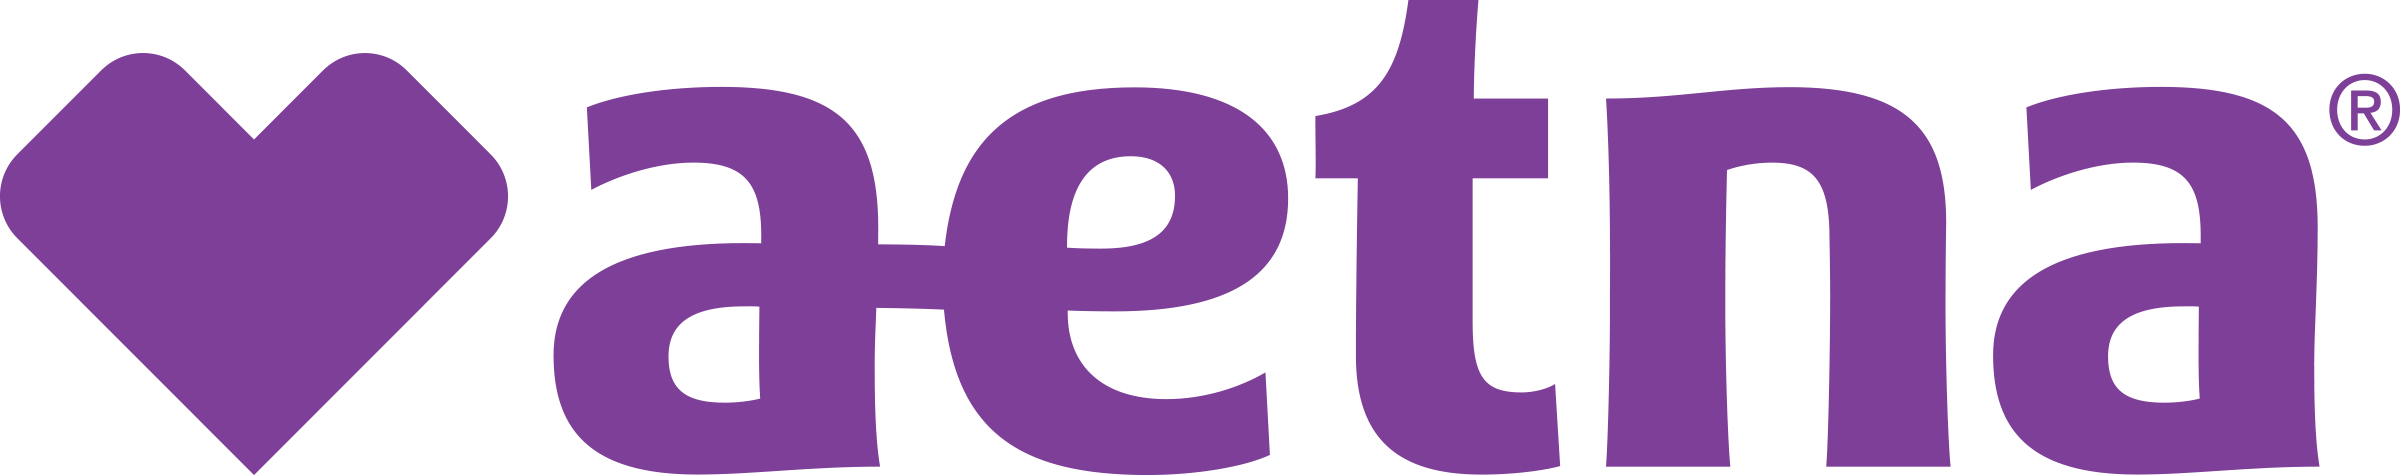 aetna-purple-heart-purple-aetna-text-in-a-sleek-and-modern-sans-serif-logo